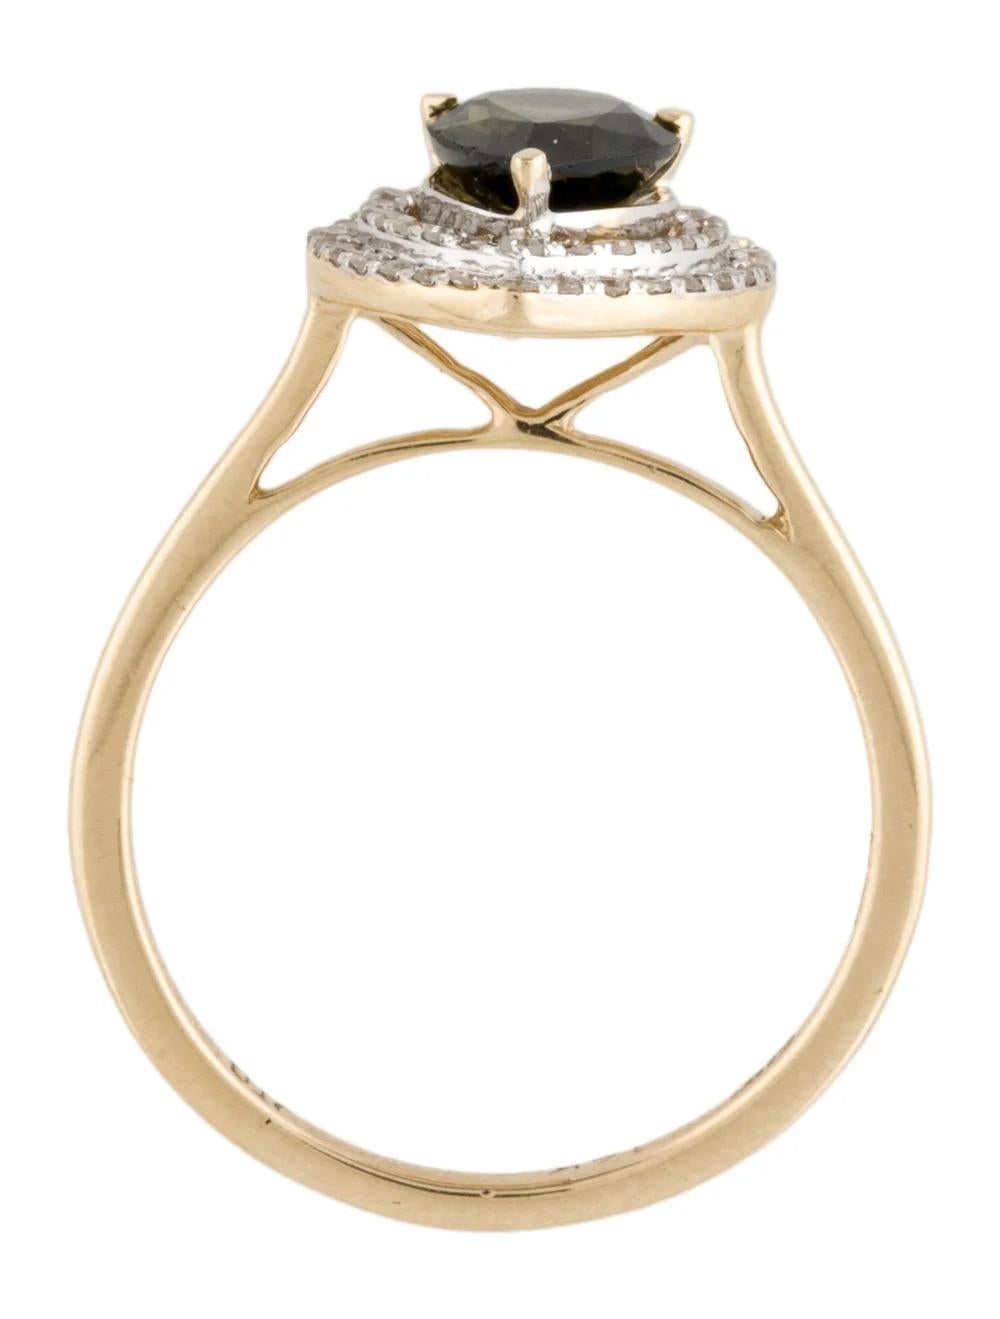 Women's 14K Tourmaline Diamond Cocktail Ring - Vintage Jewelry, Luxury - Size 6.25 For Sale